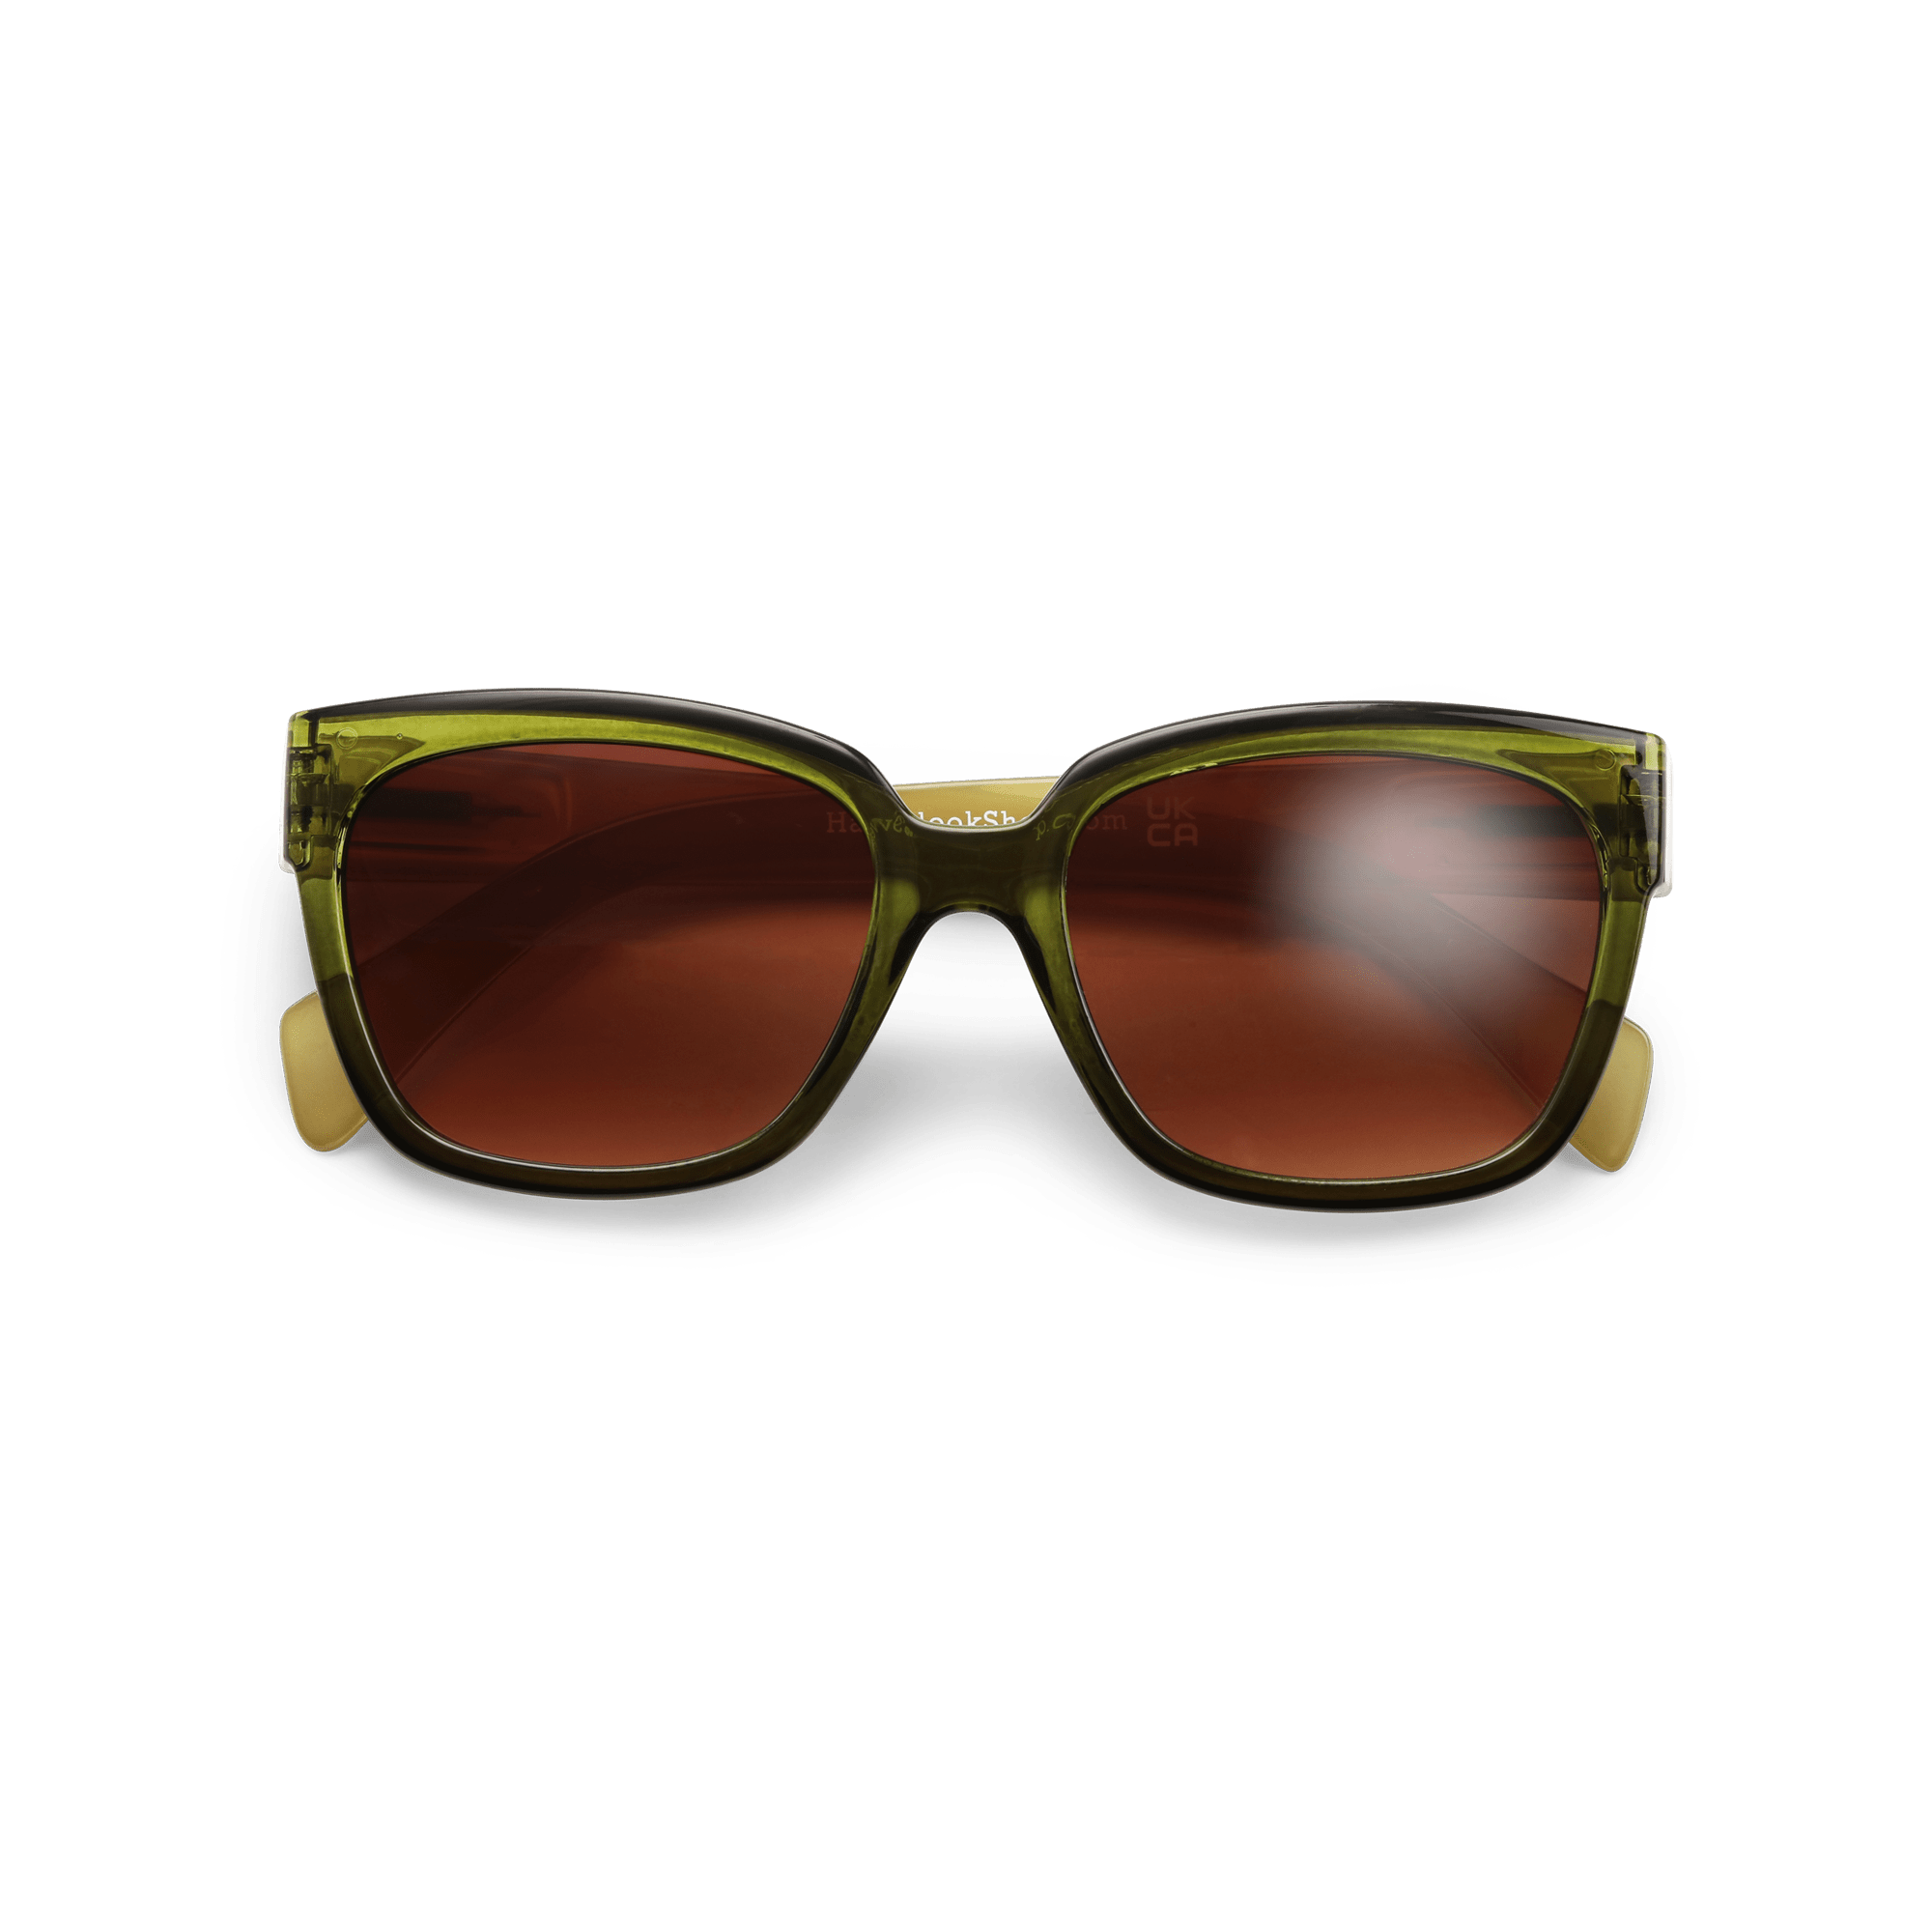 Sonnenfernbrillen Mood - army/moss aus Have A Look